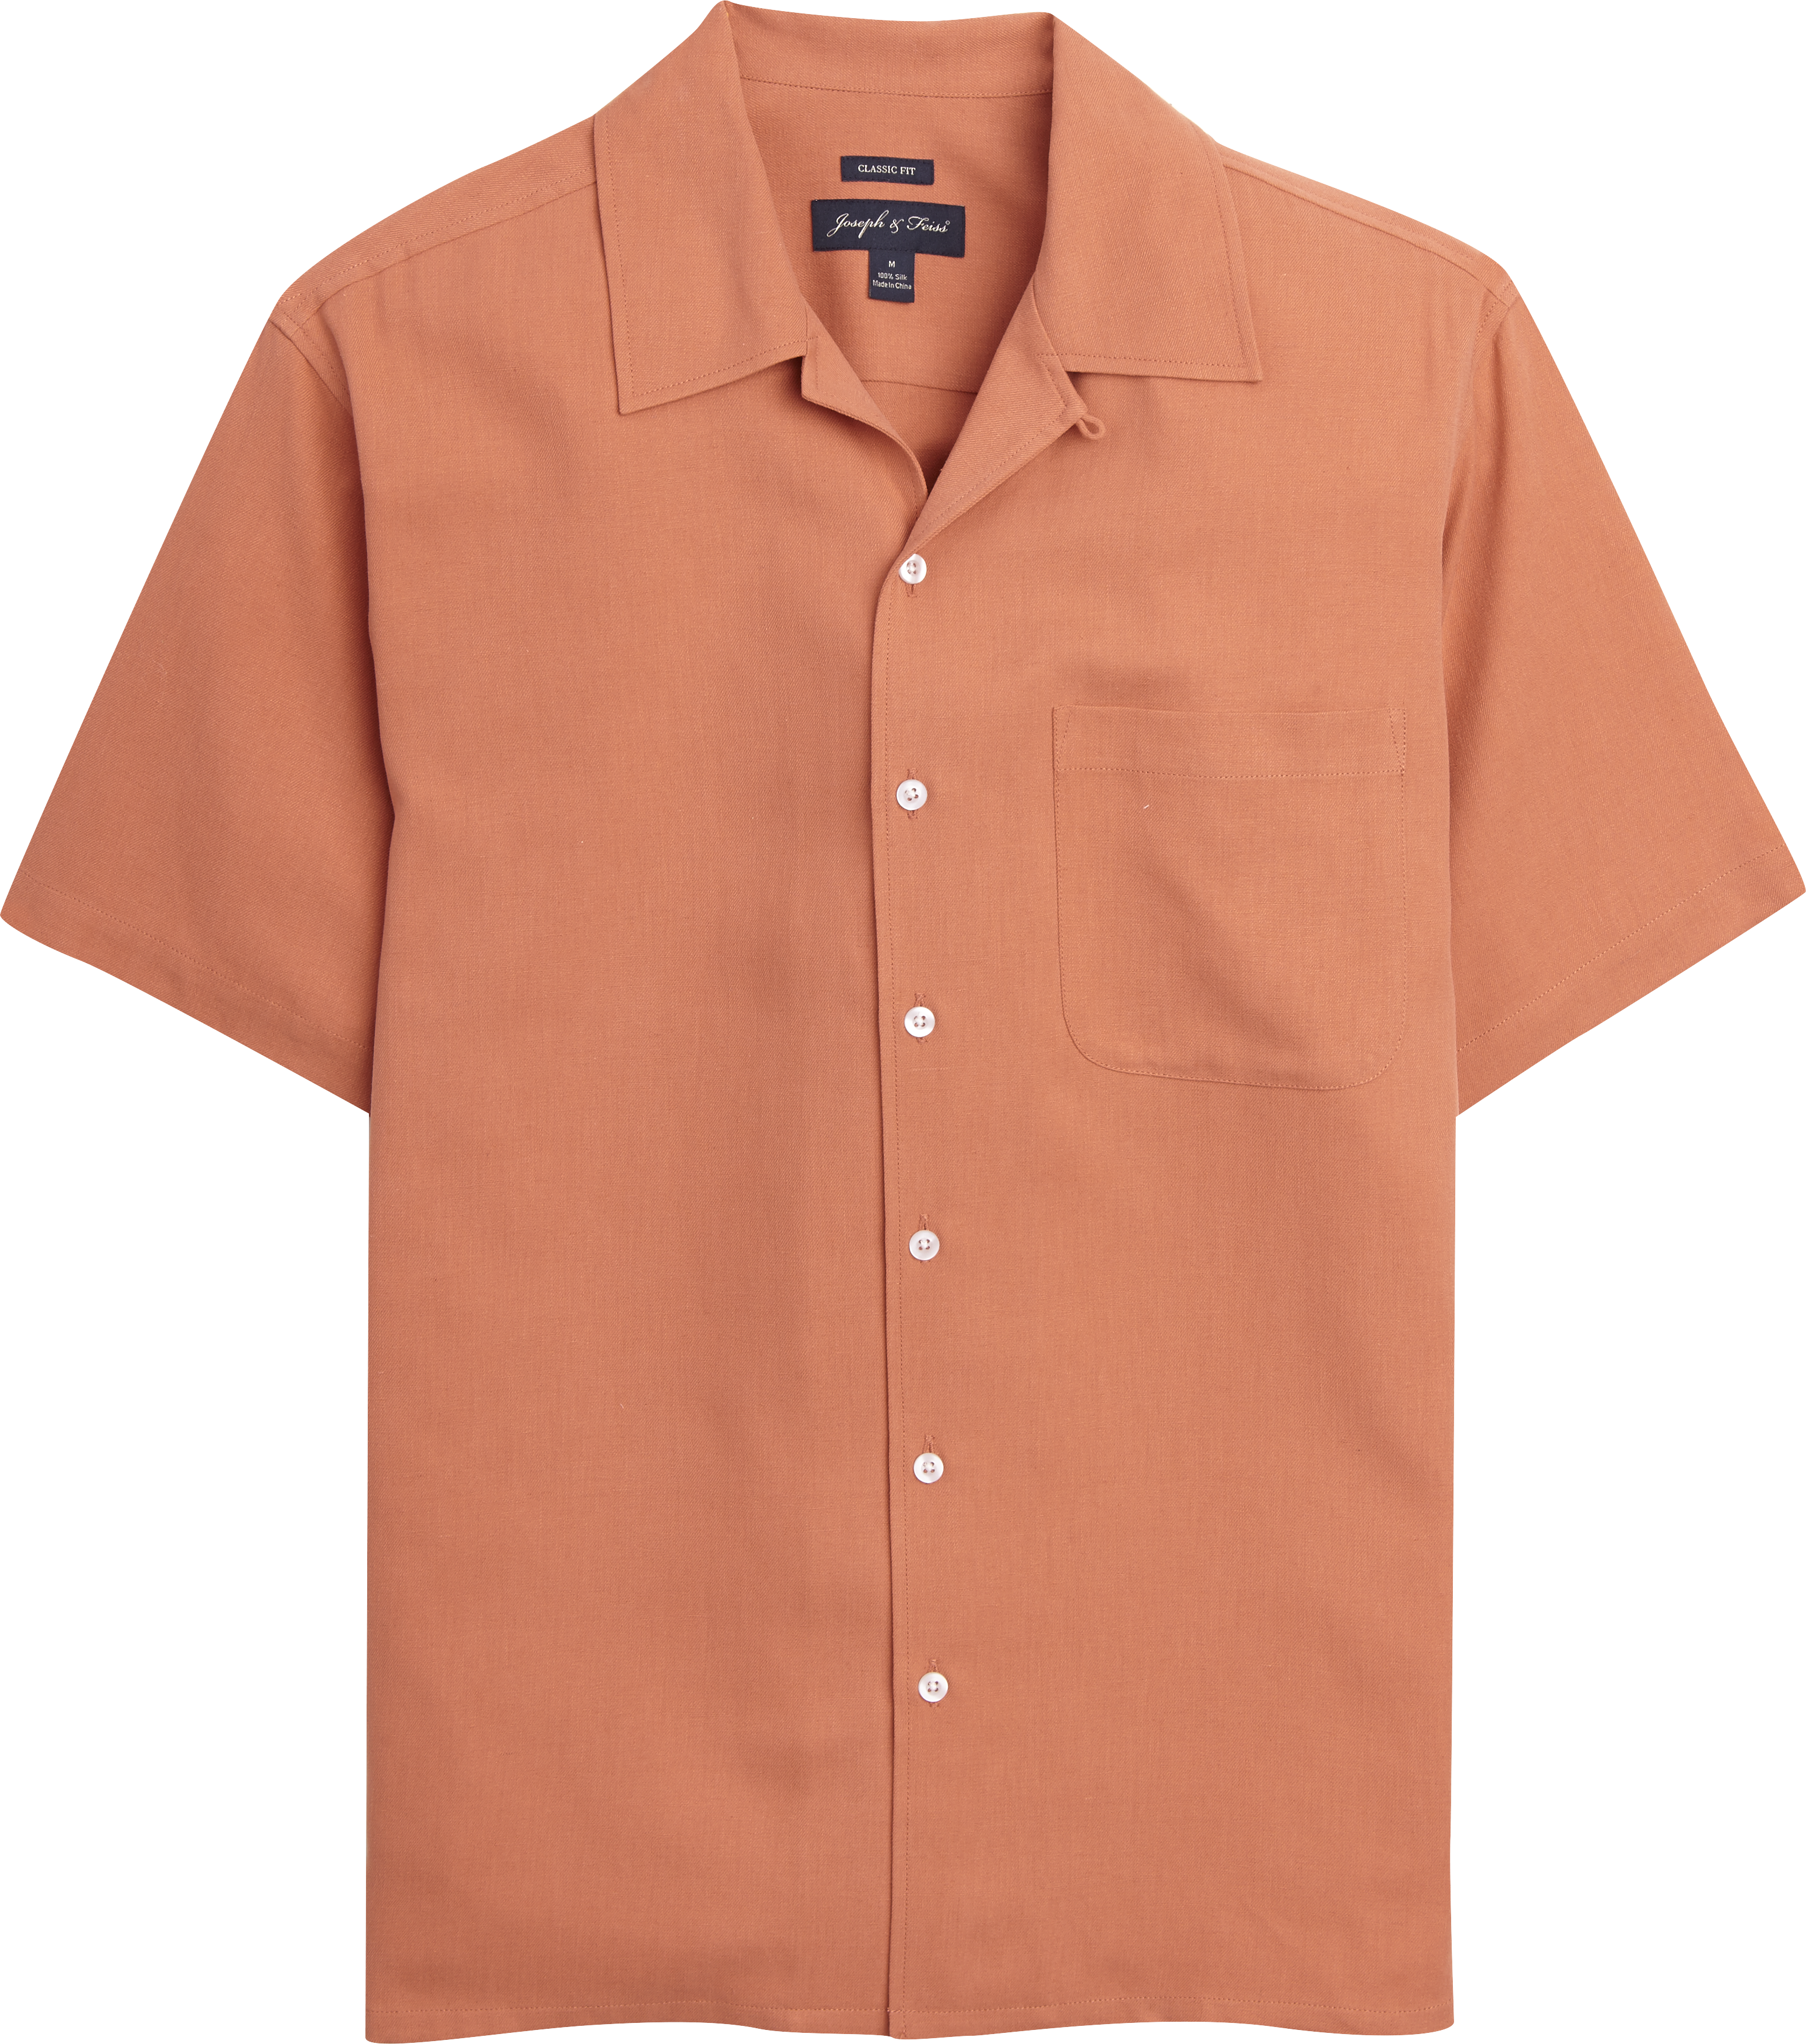 Joseph & Feiss Orange Silk Classic Fit Camp Shirt - Men's Sale | Men's ...